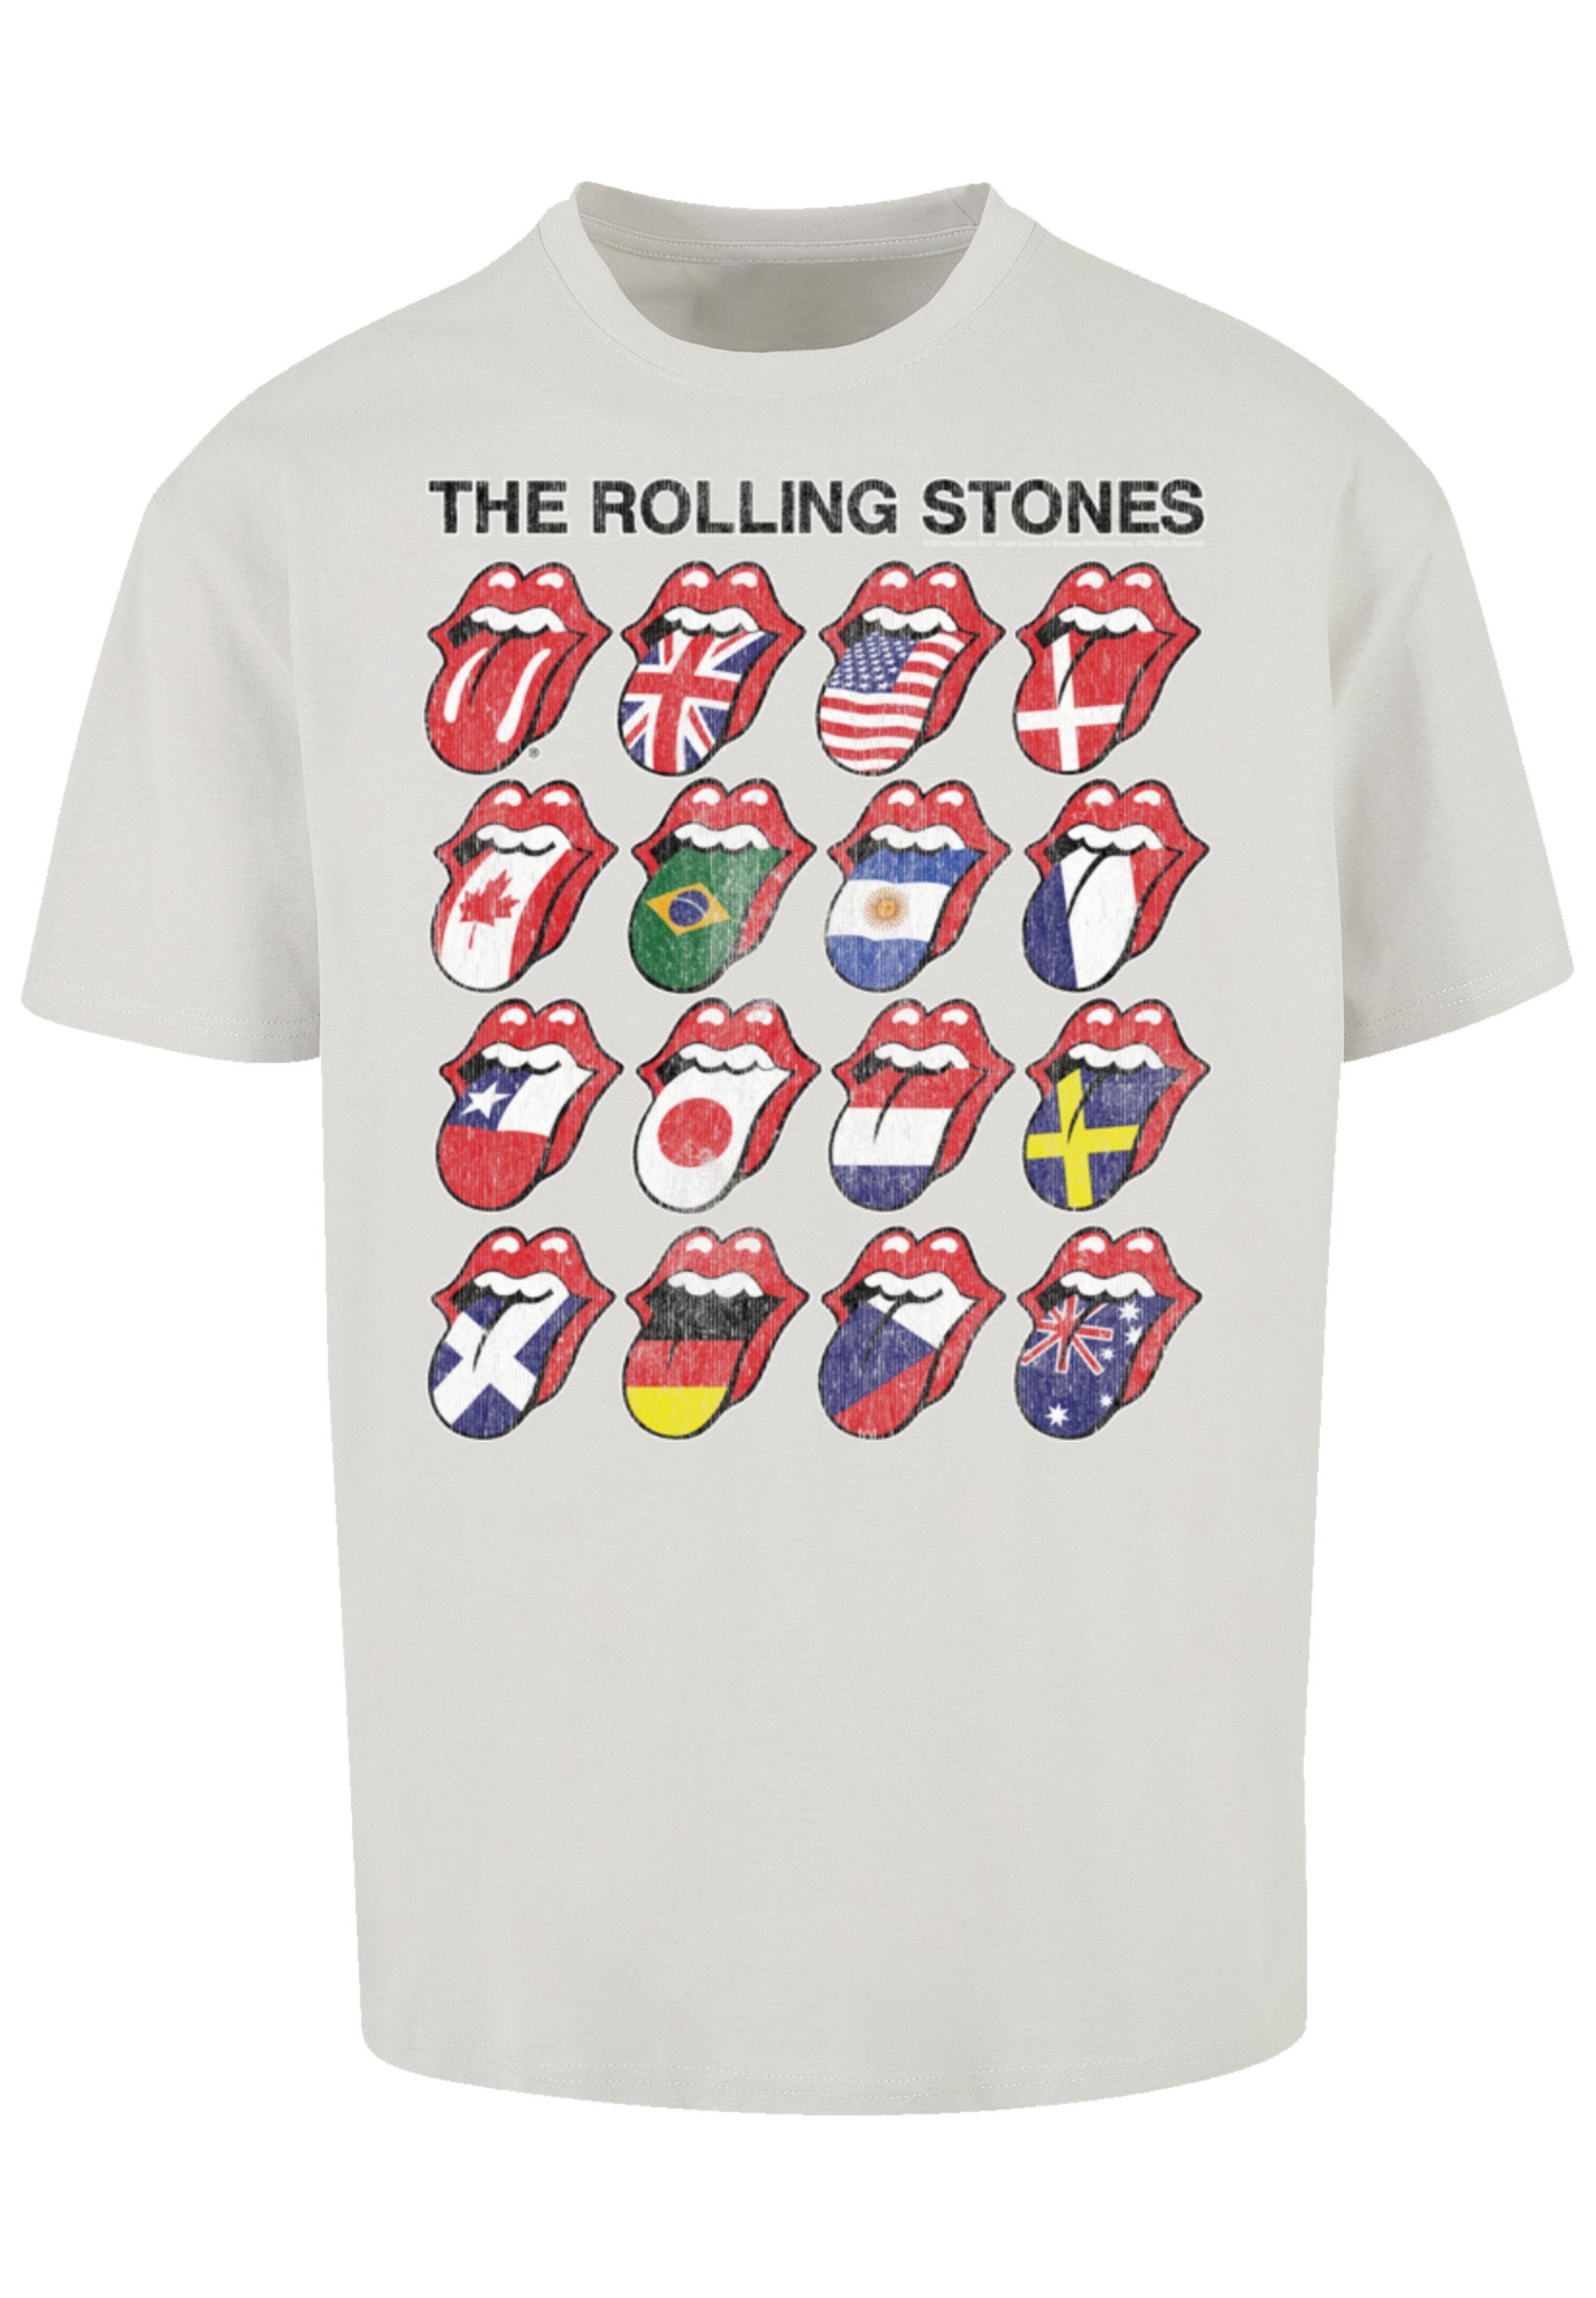 The T-Shirt Stones lightasphalt F4NT4STIC Lounge Voodoo Musik, Tongues Rolling Band, Logo